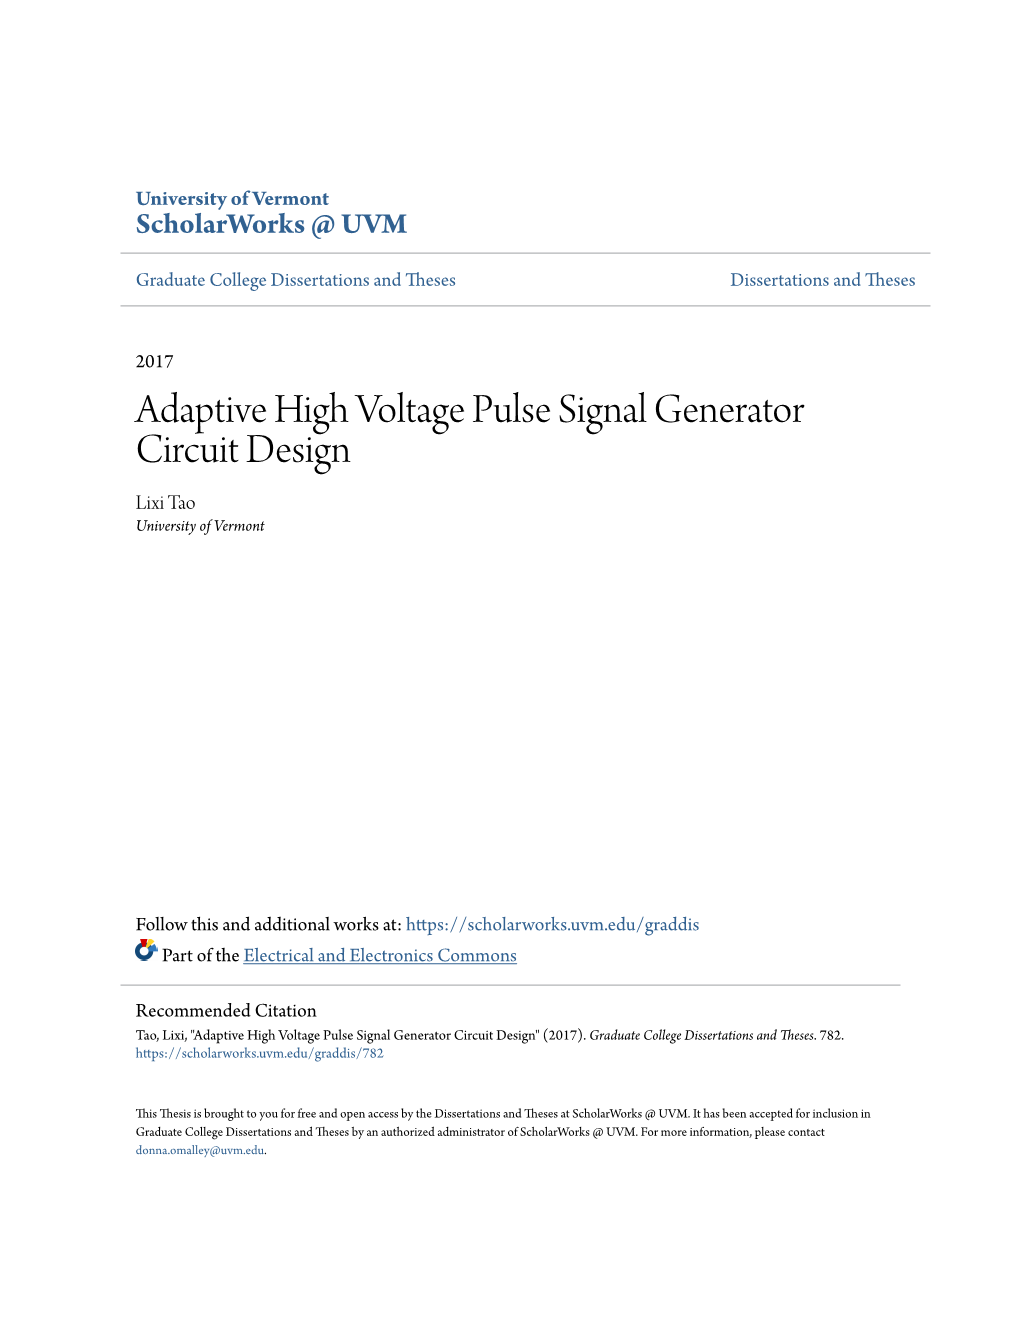 Adaptive High Voltage Pulse Signal Generator Circuit Design Lixi Tao University of Vermont